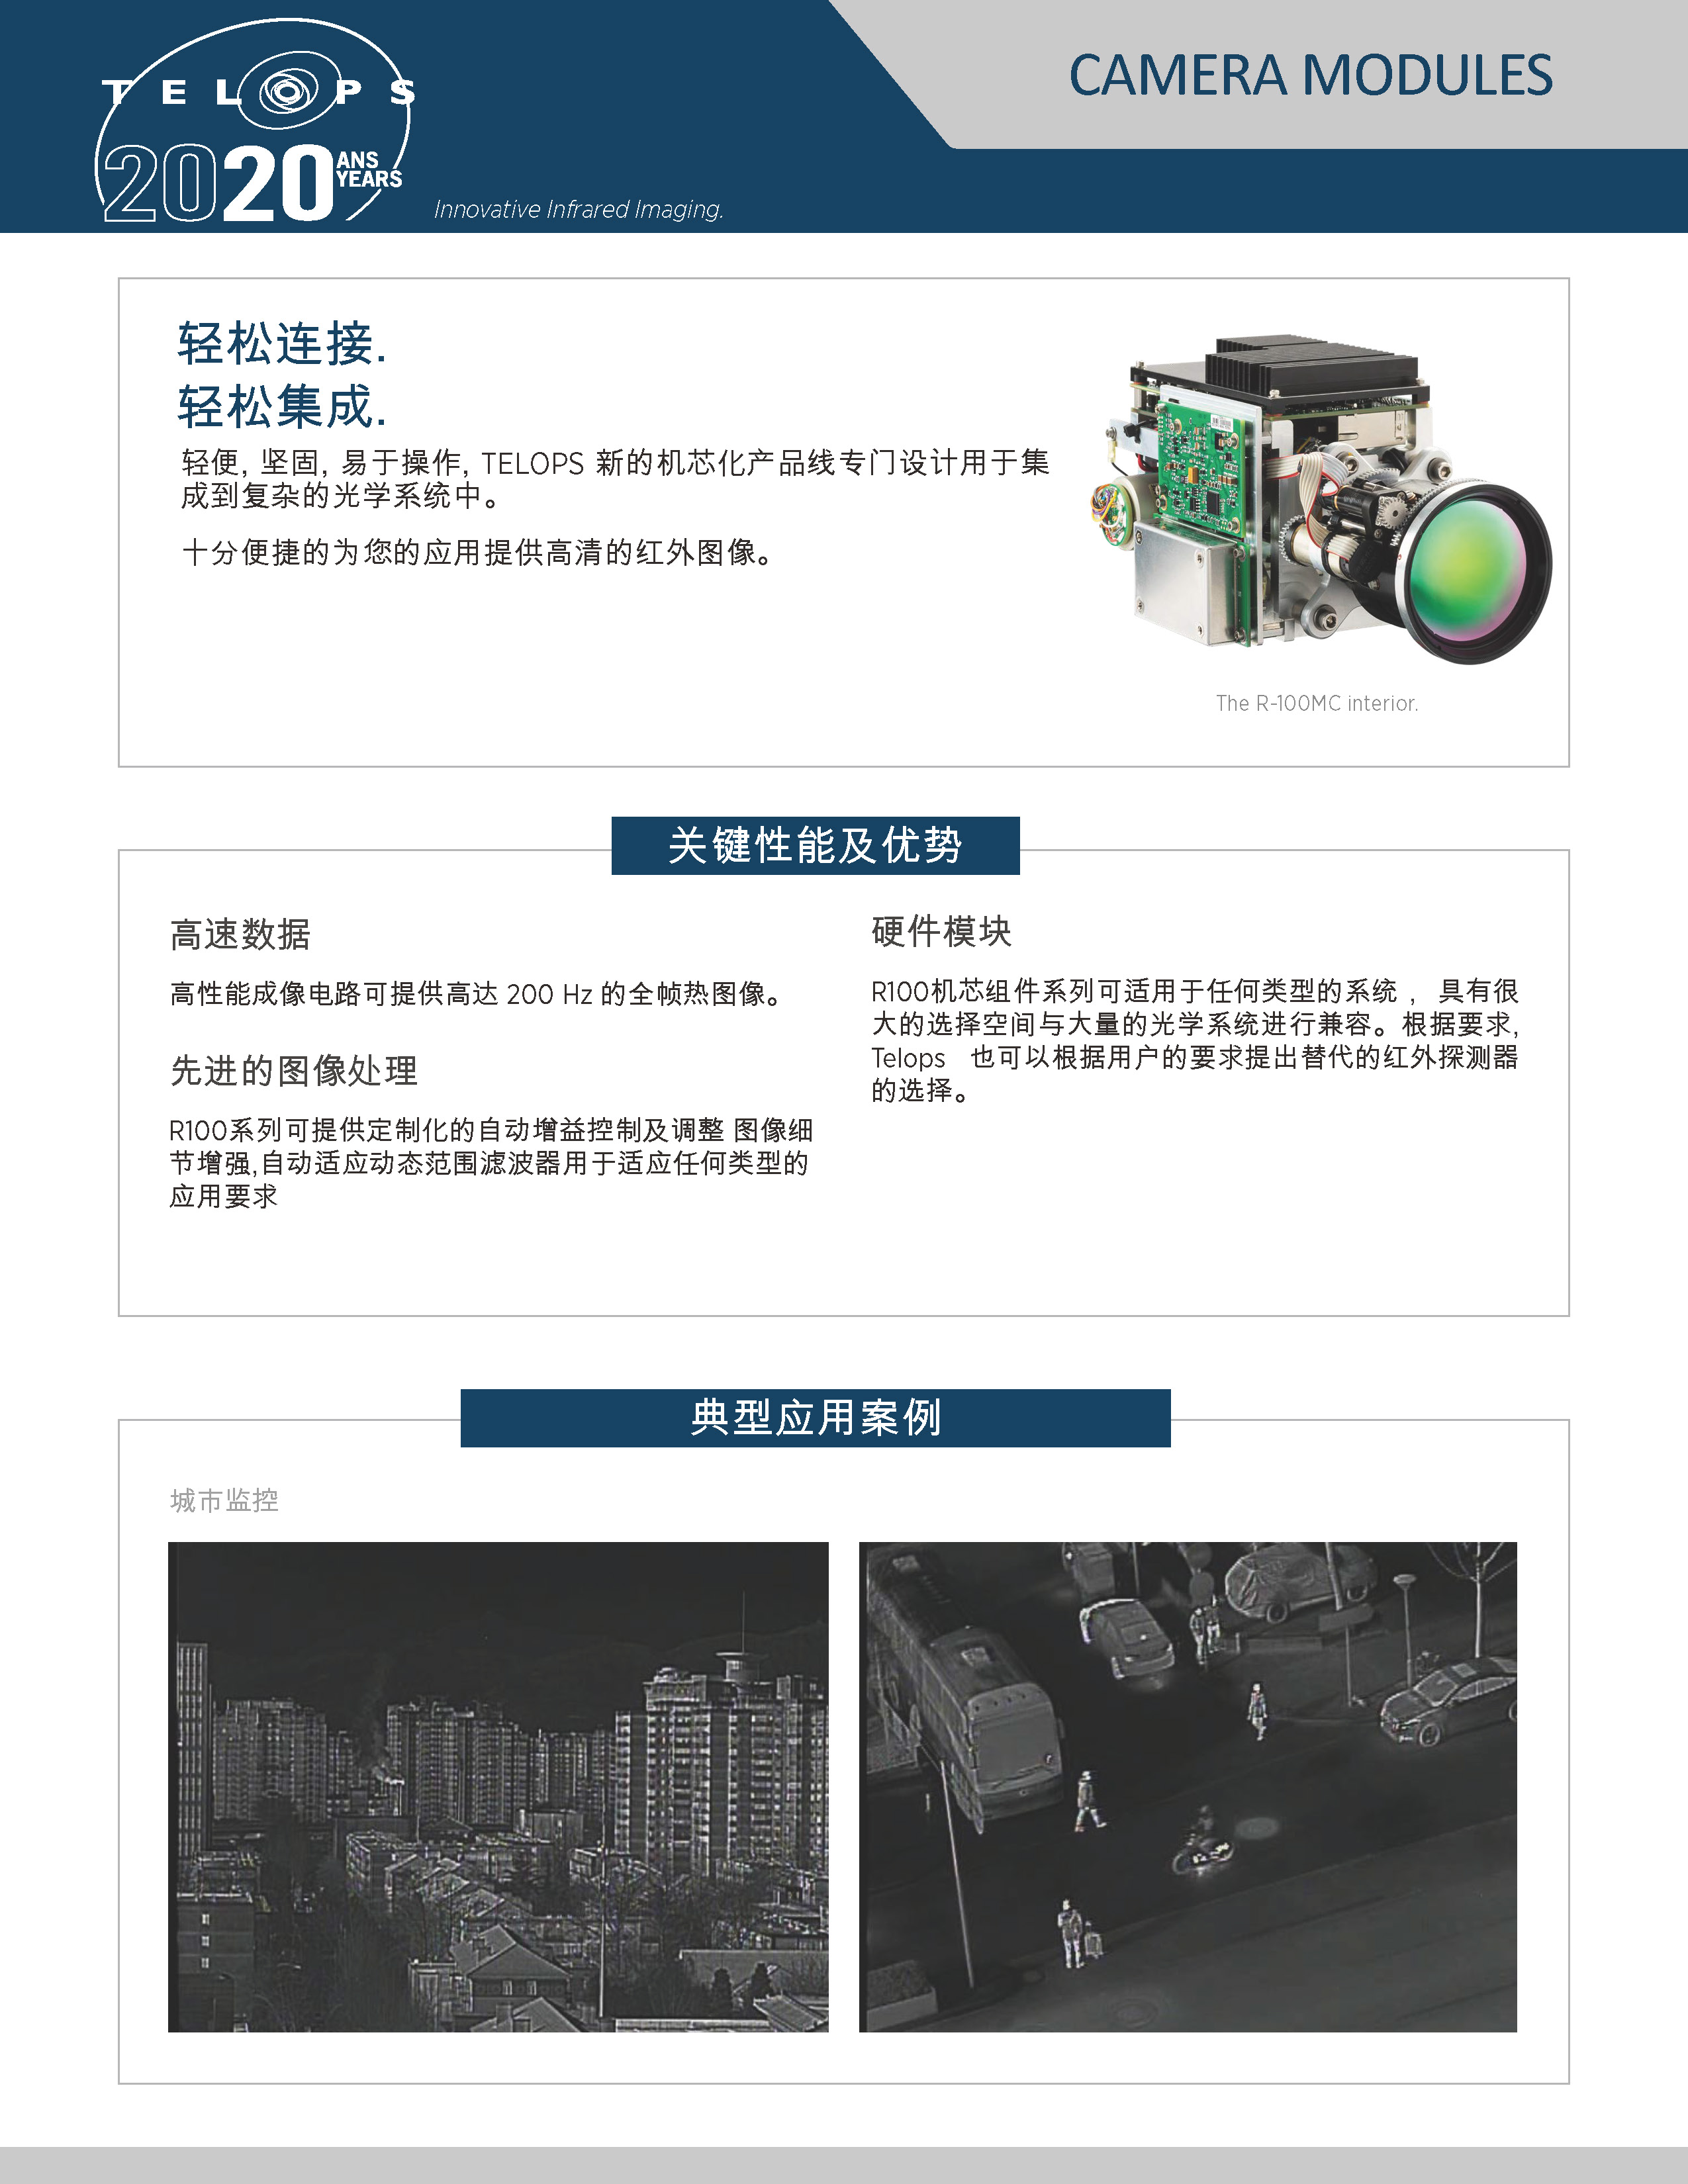 2020_Camera_Modules_Family_-_CHINA_页面_1.jpg